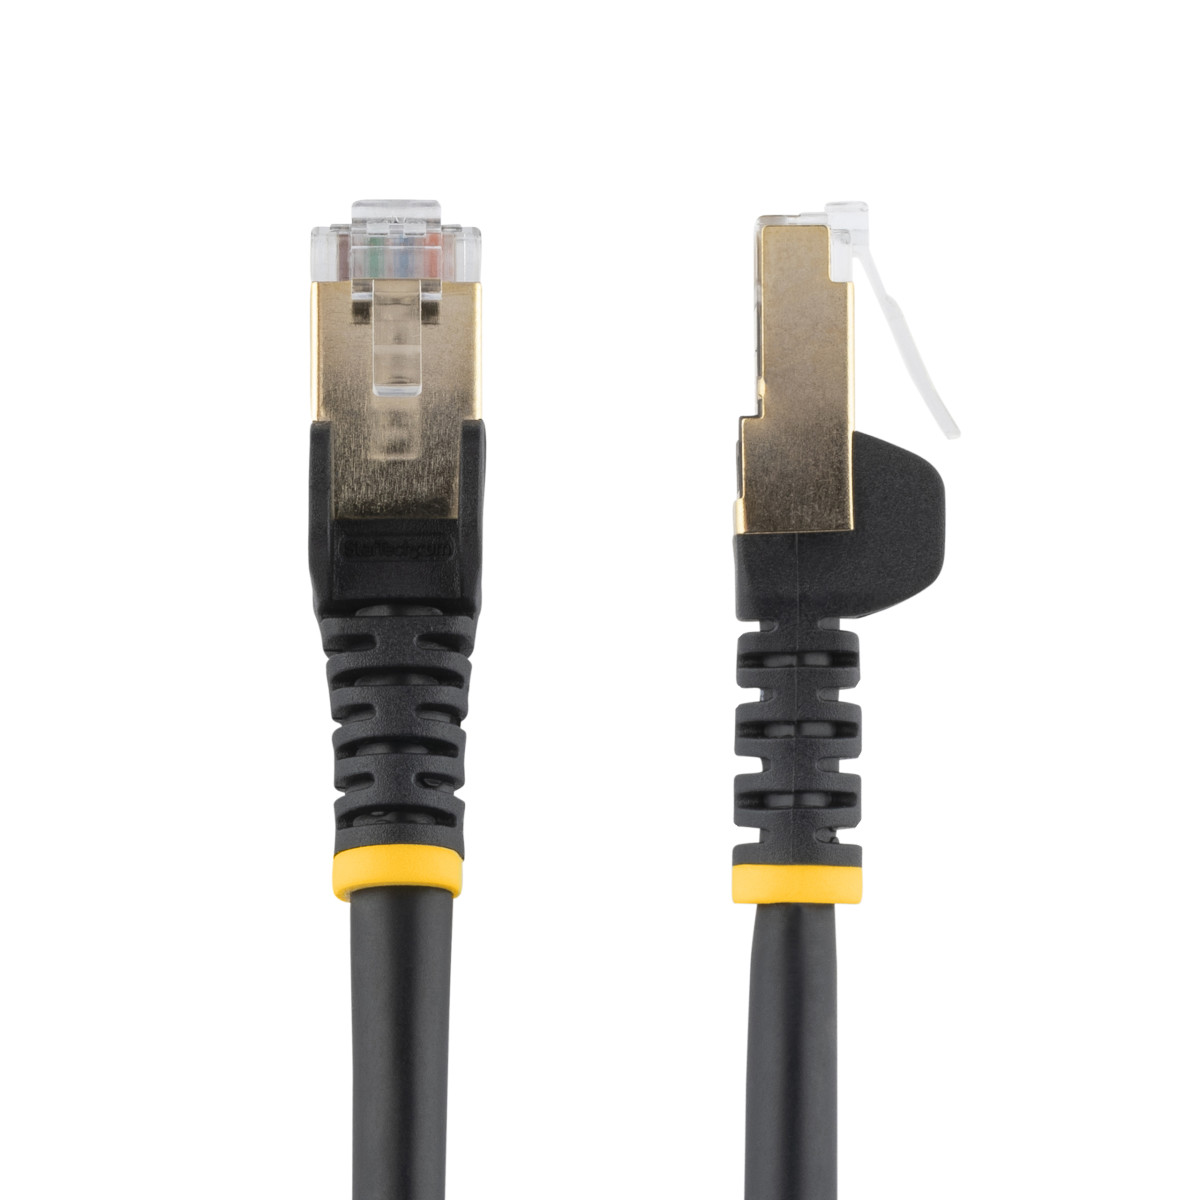 Cable - Black CAT6a Ethernet Cable 5m